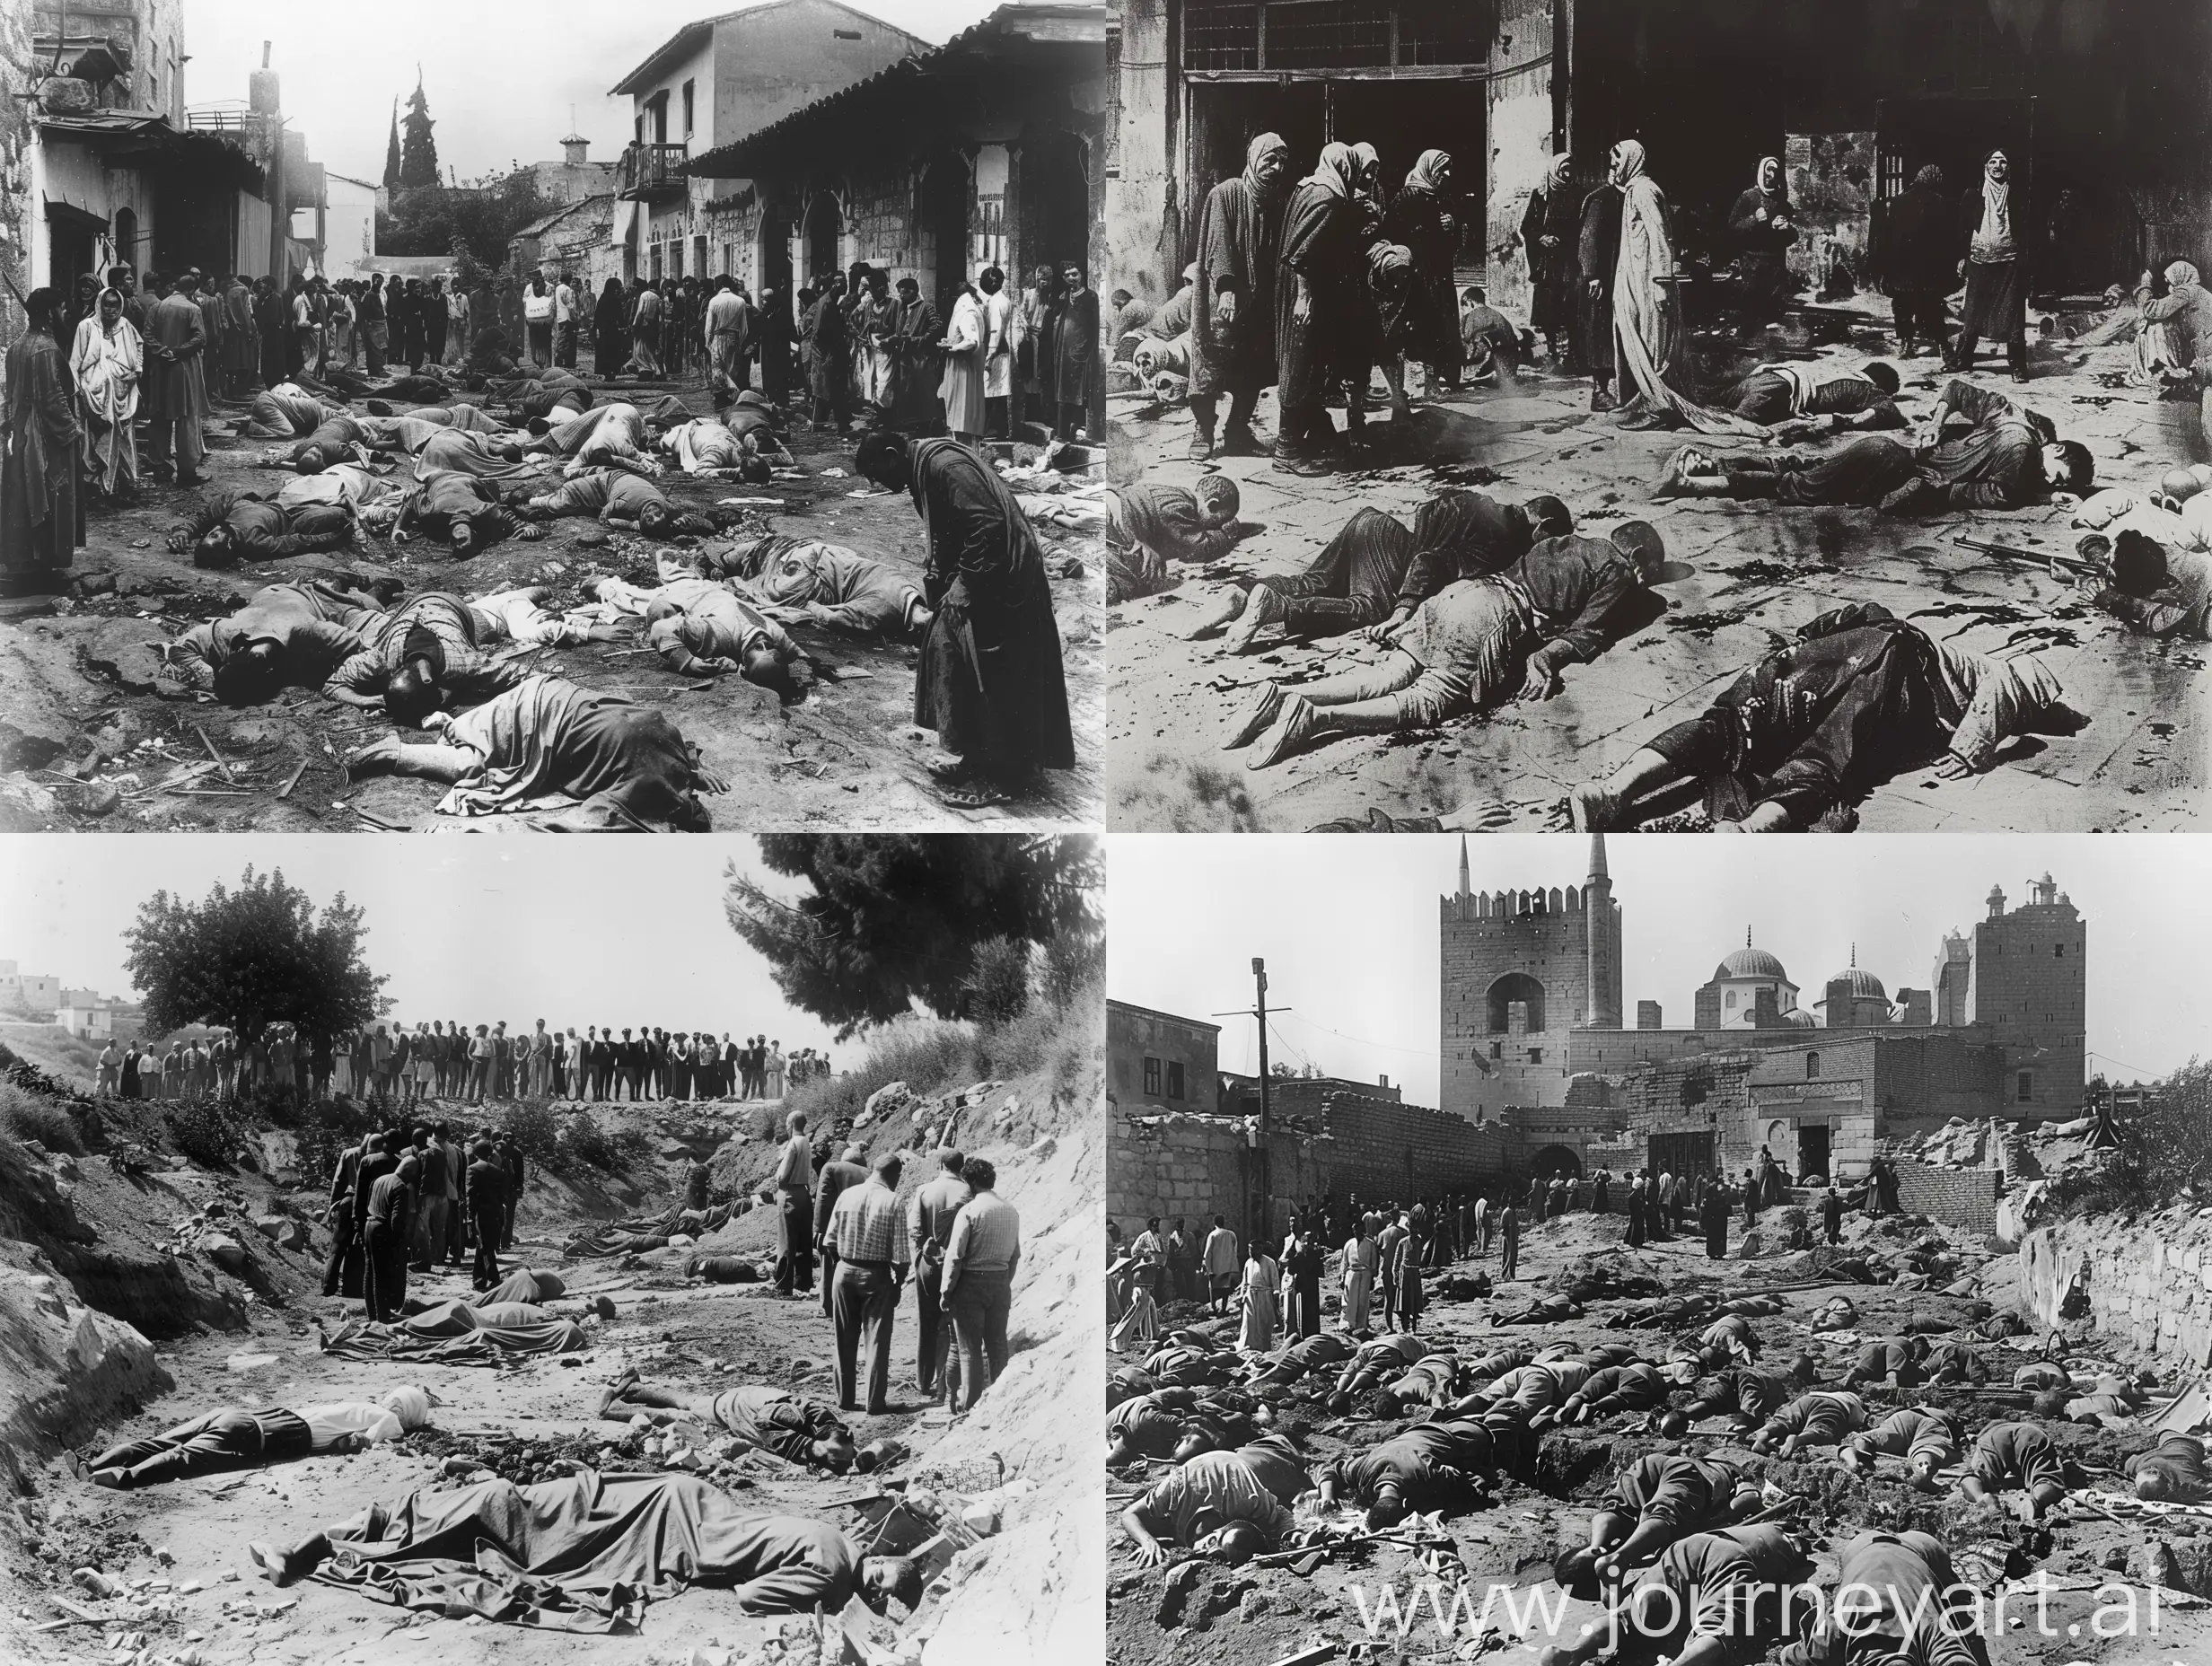 Tragic-Izmit-Massacres-Commemorating-Loss-and-Injustice